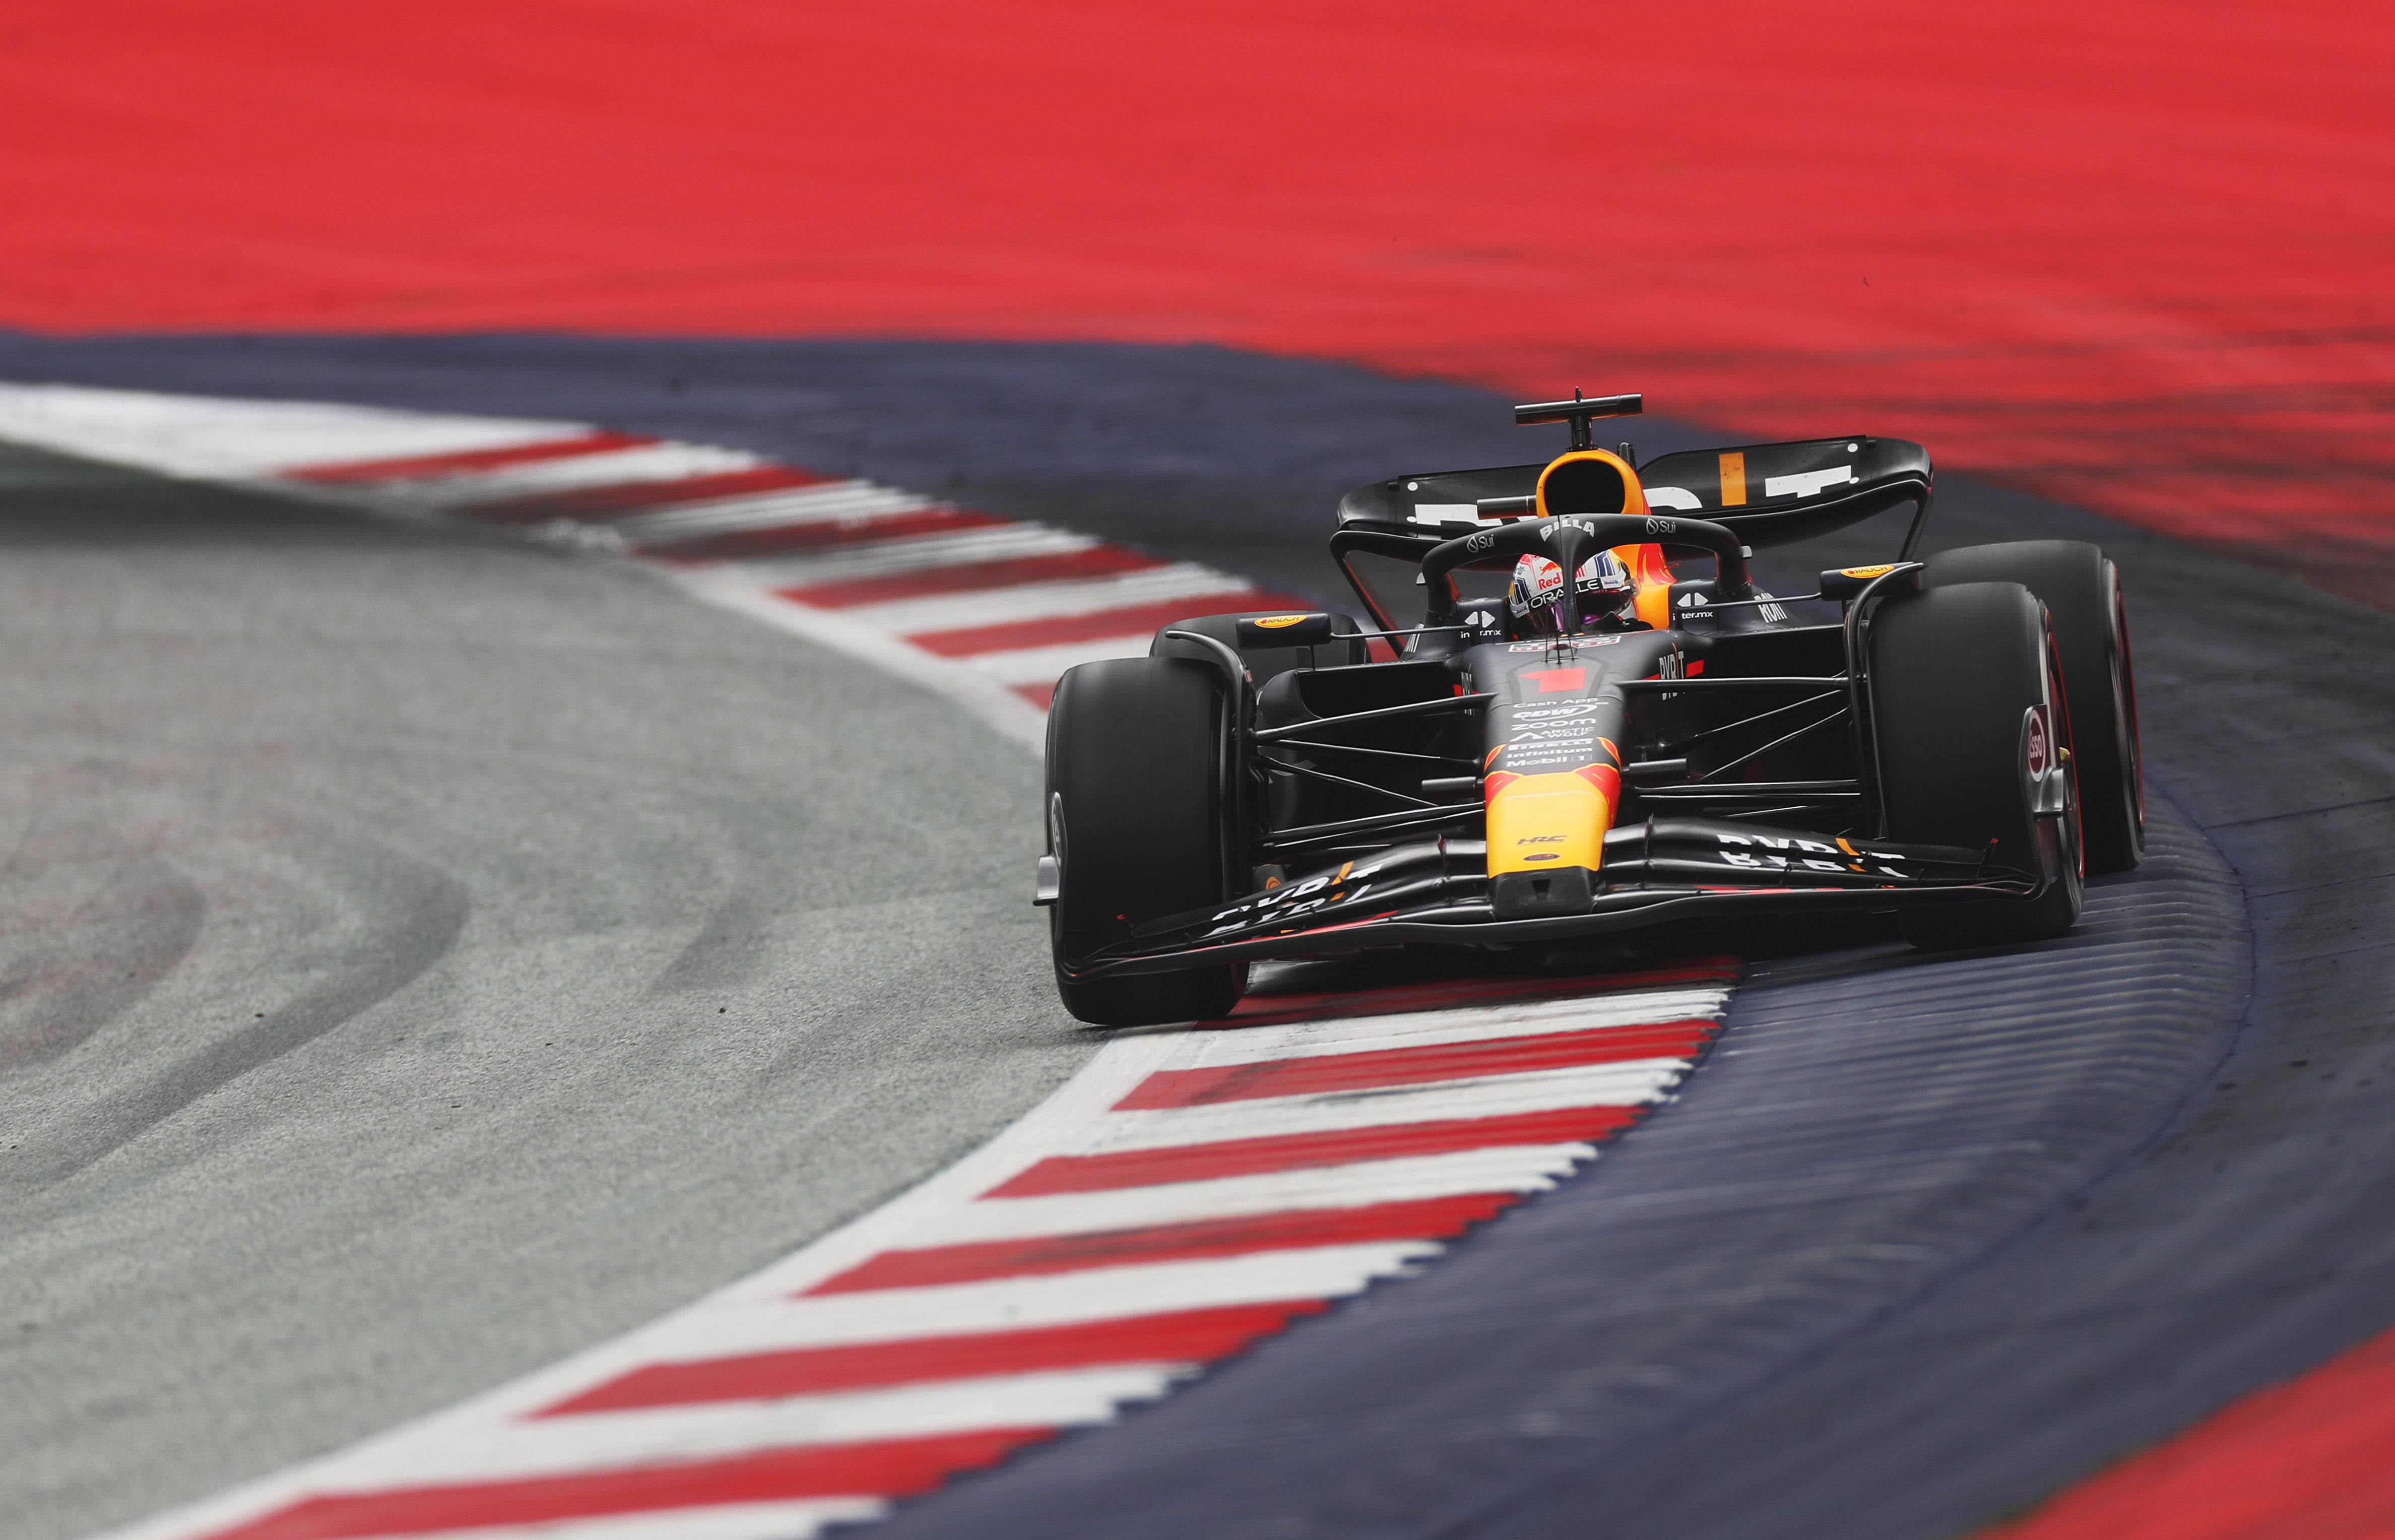 Formula 1 descends into farce again after Austrian Grand Prix shake-up